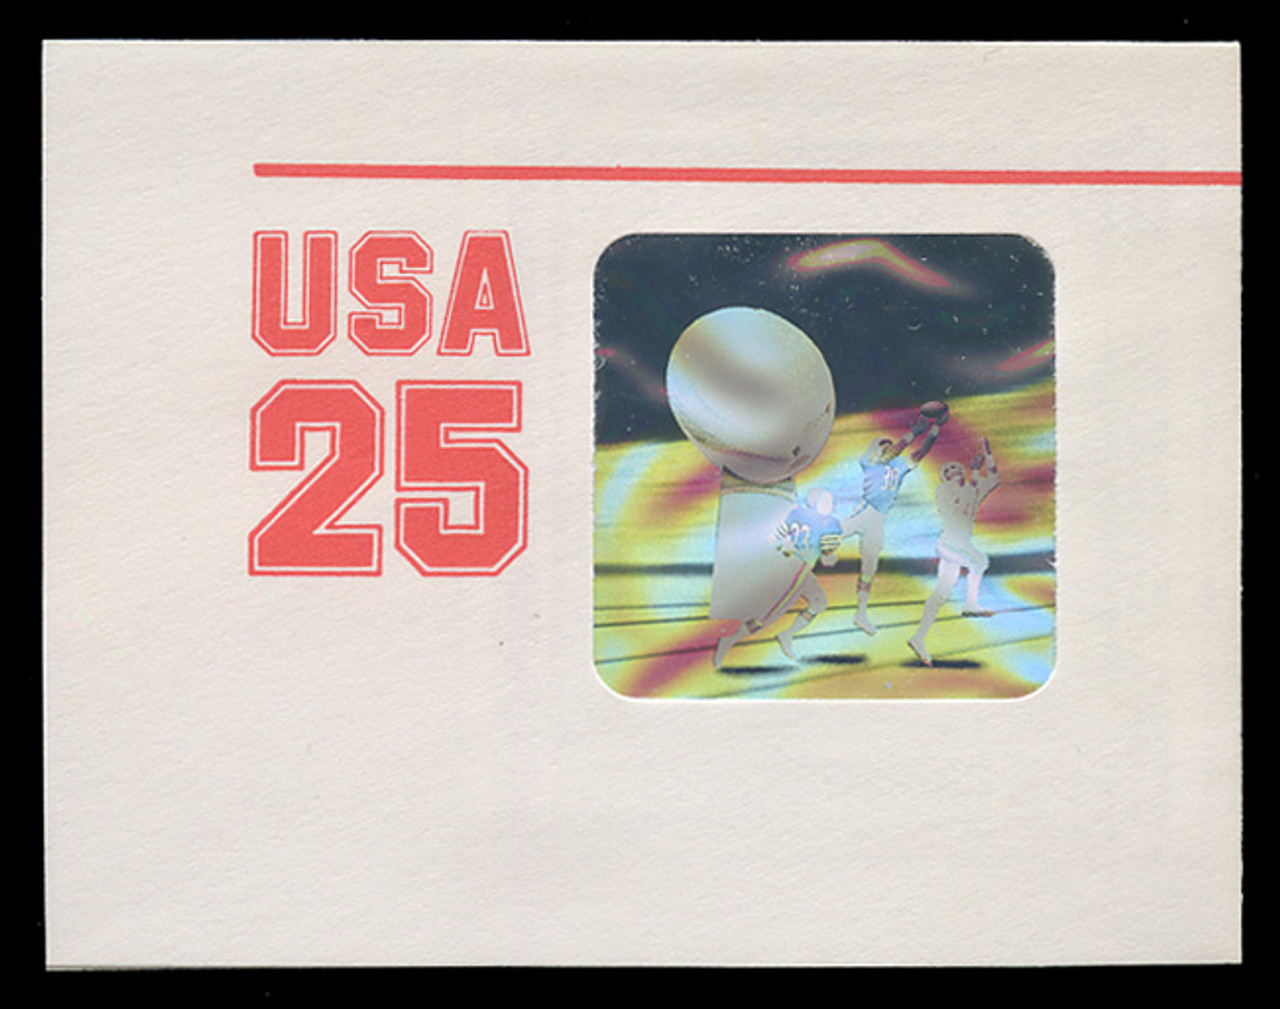 U.S. Scott # U 618 1990 25c Football Hologtam - Mint Full Corner